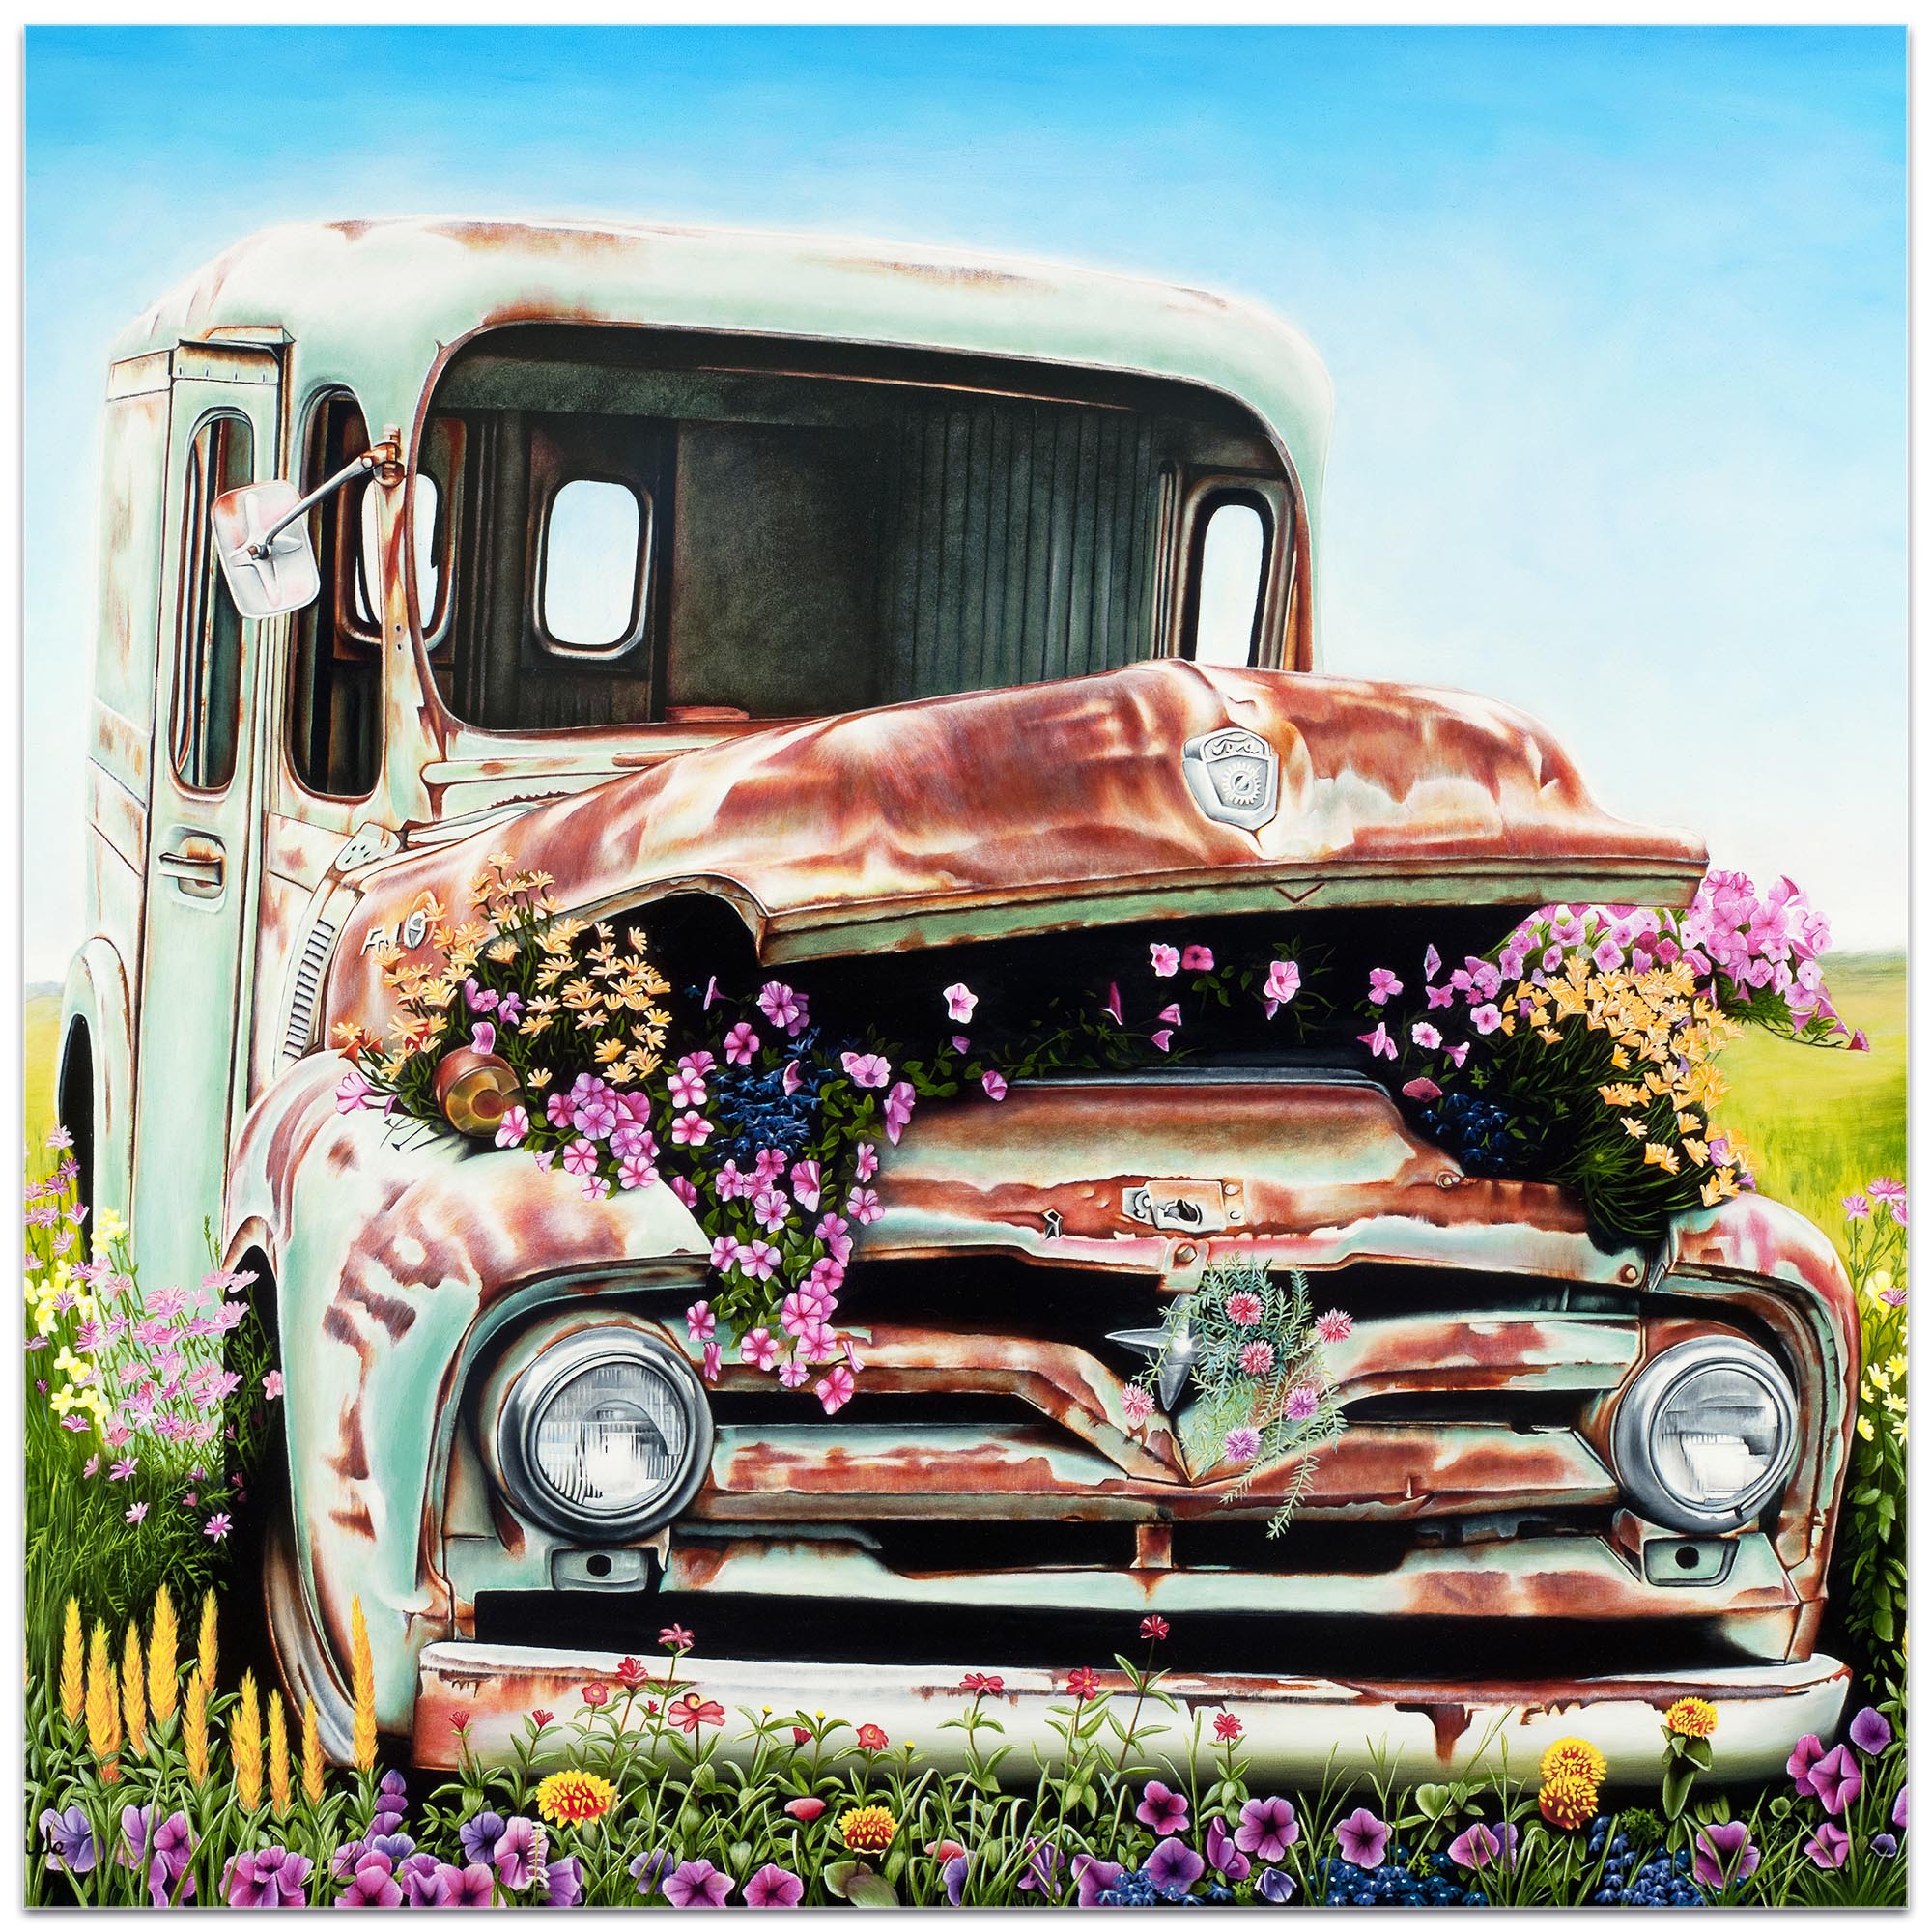 Americana Wall Art 'Got Flowers' - Classic Cars Decor on Metal or Plexiglass - Image 2